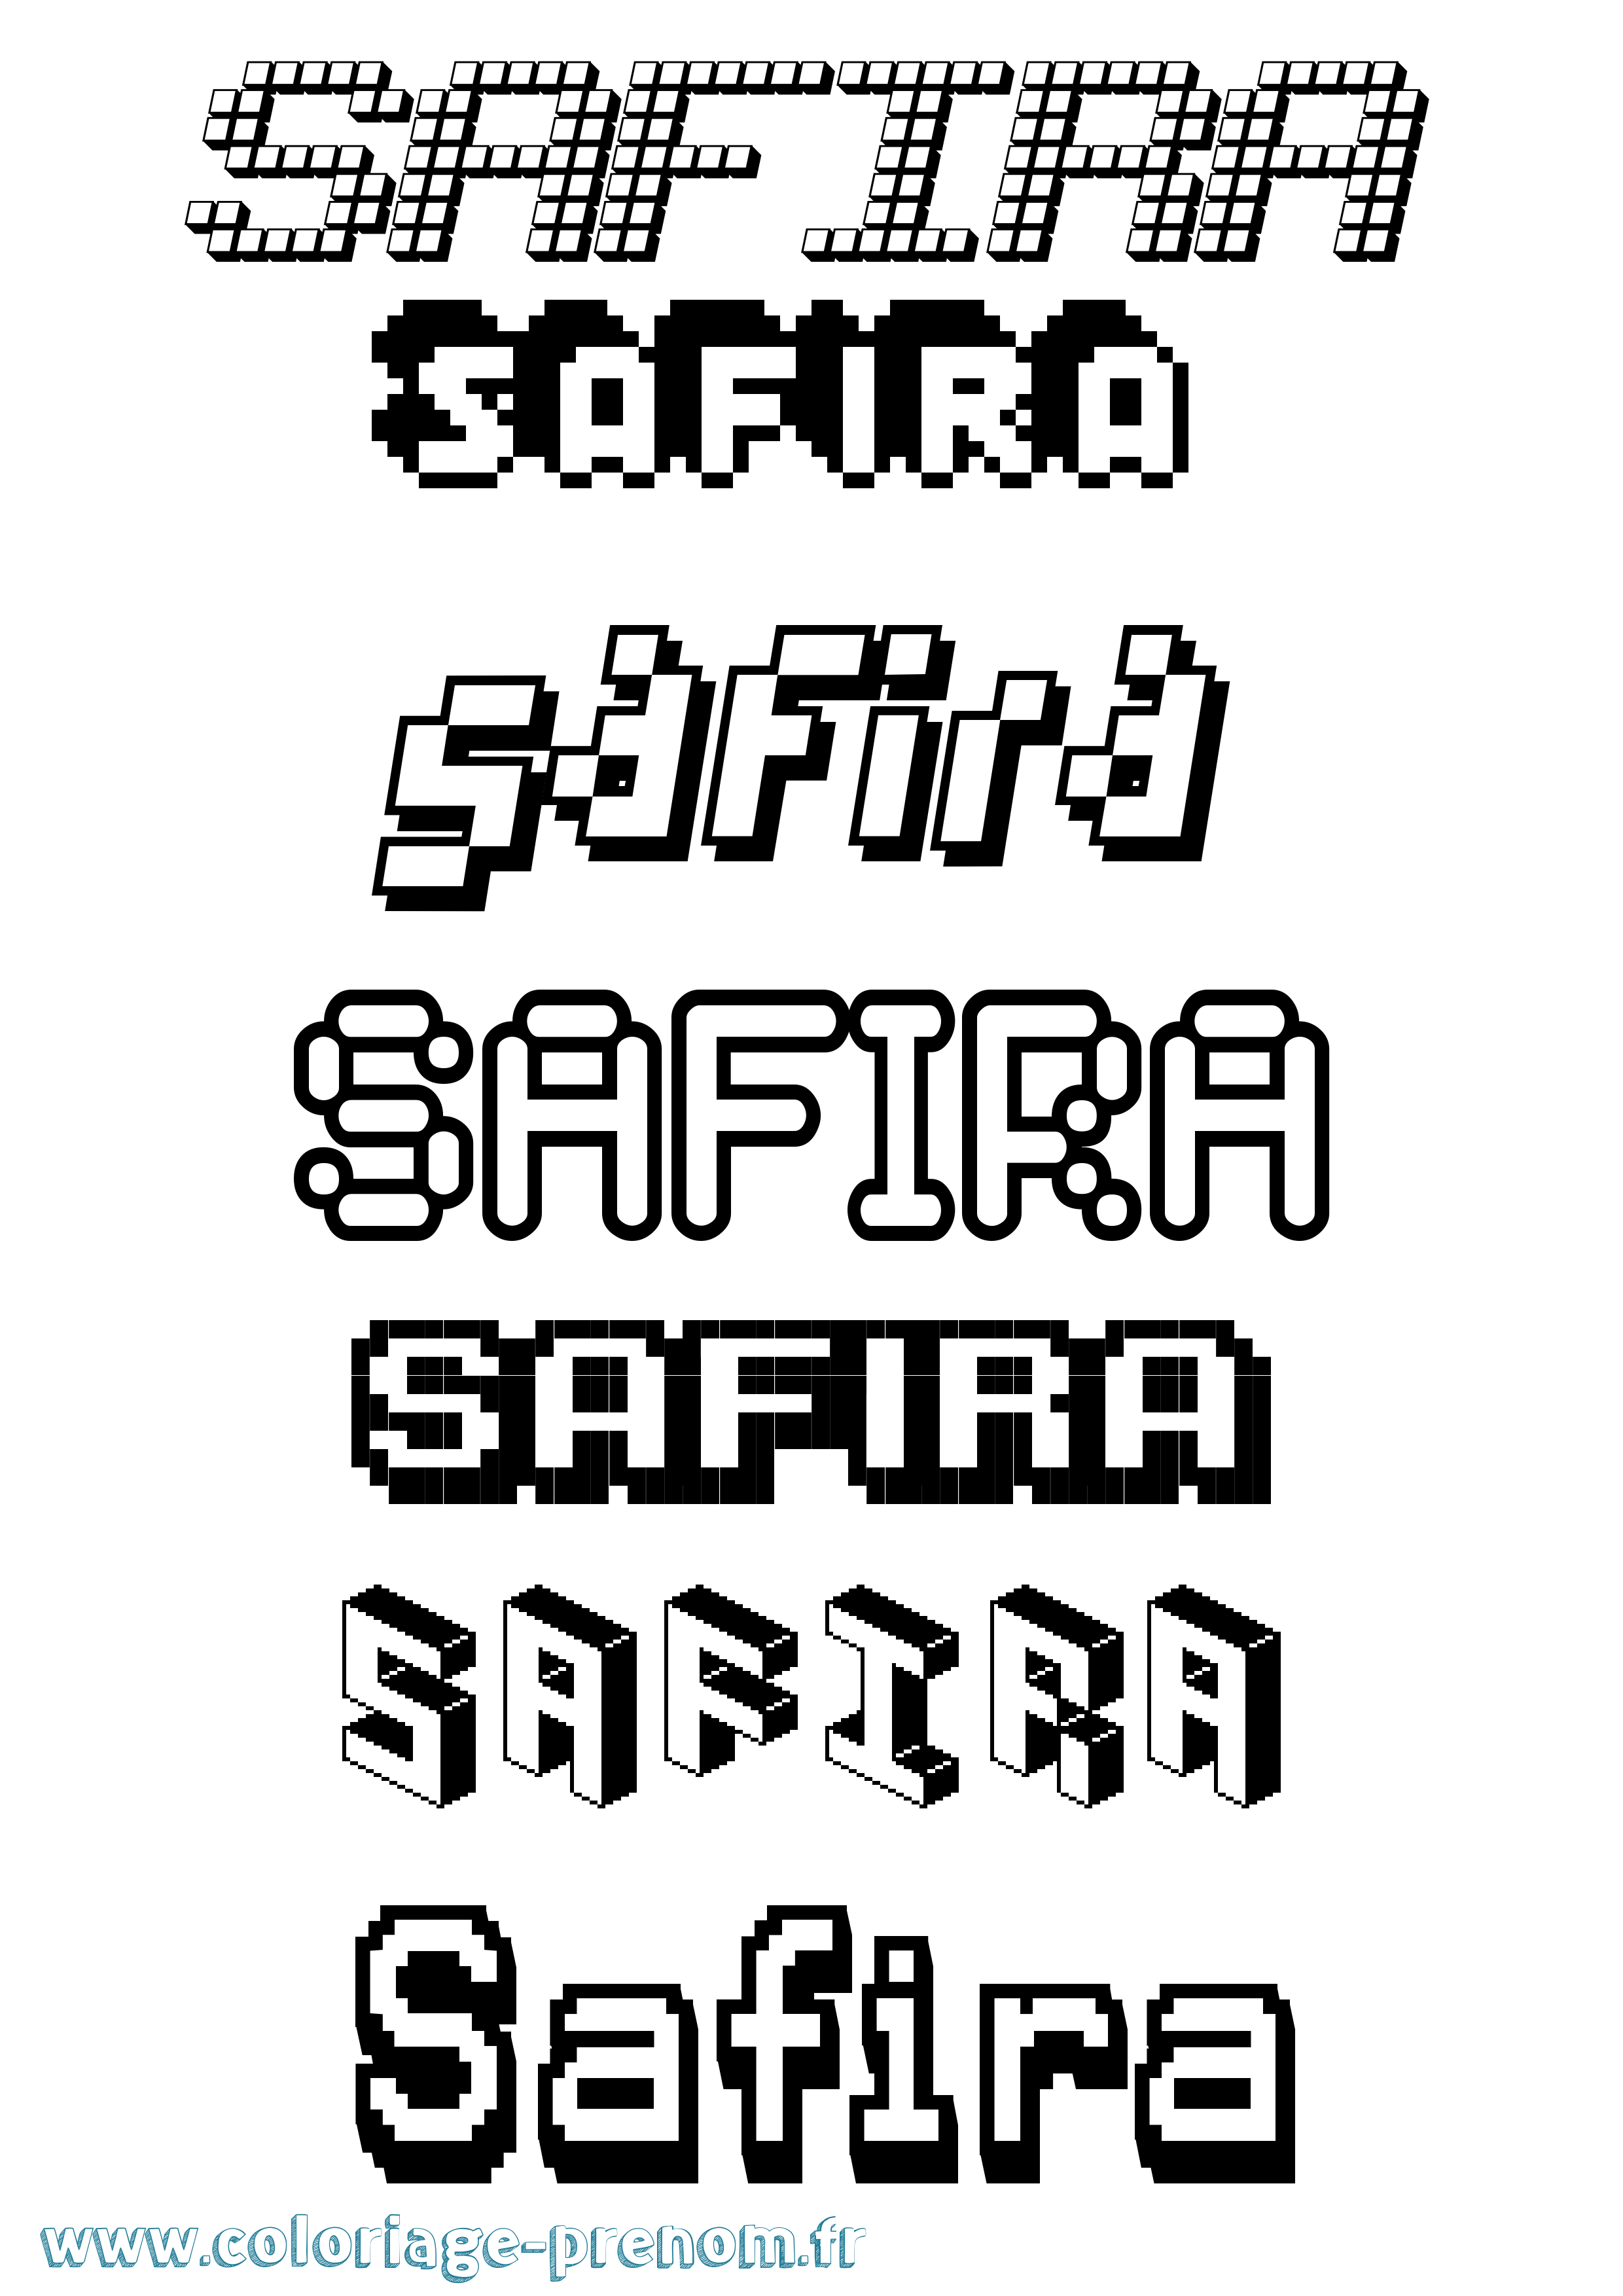 Coloriage prénom Safira Pixel